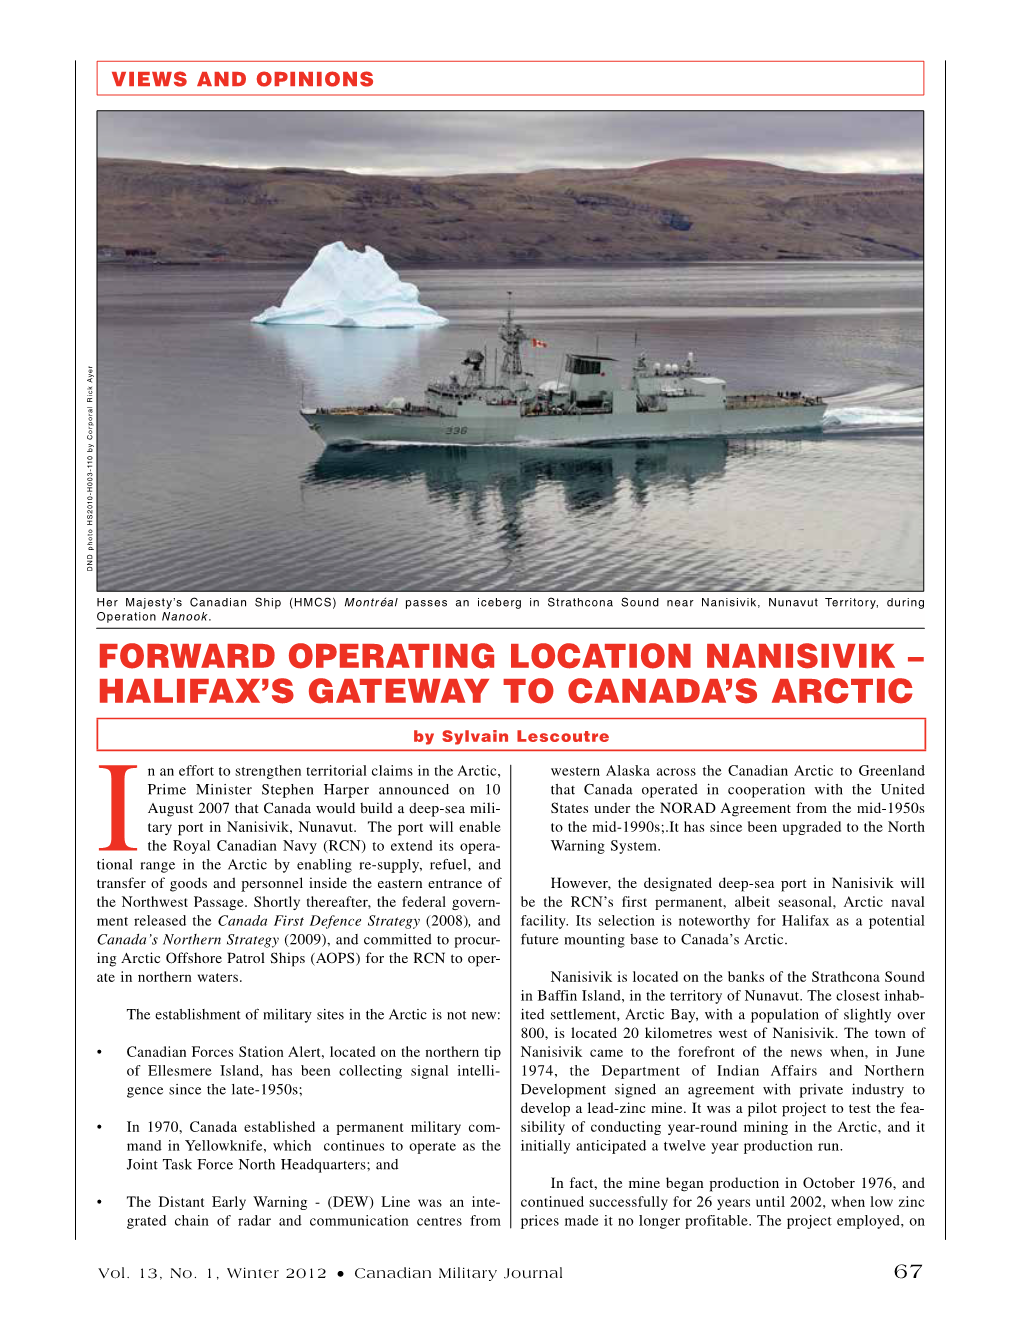 Forward Operating Location Nanisivik – Halifax's Gateway